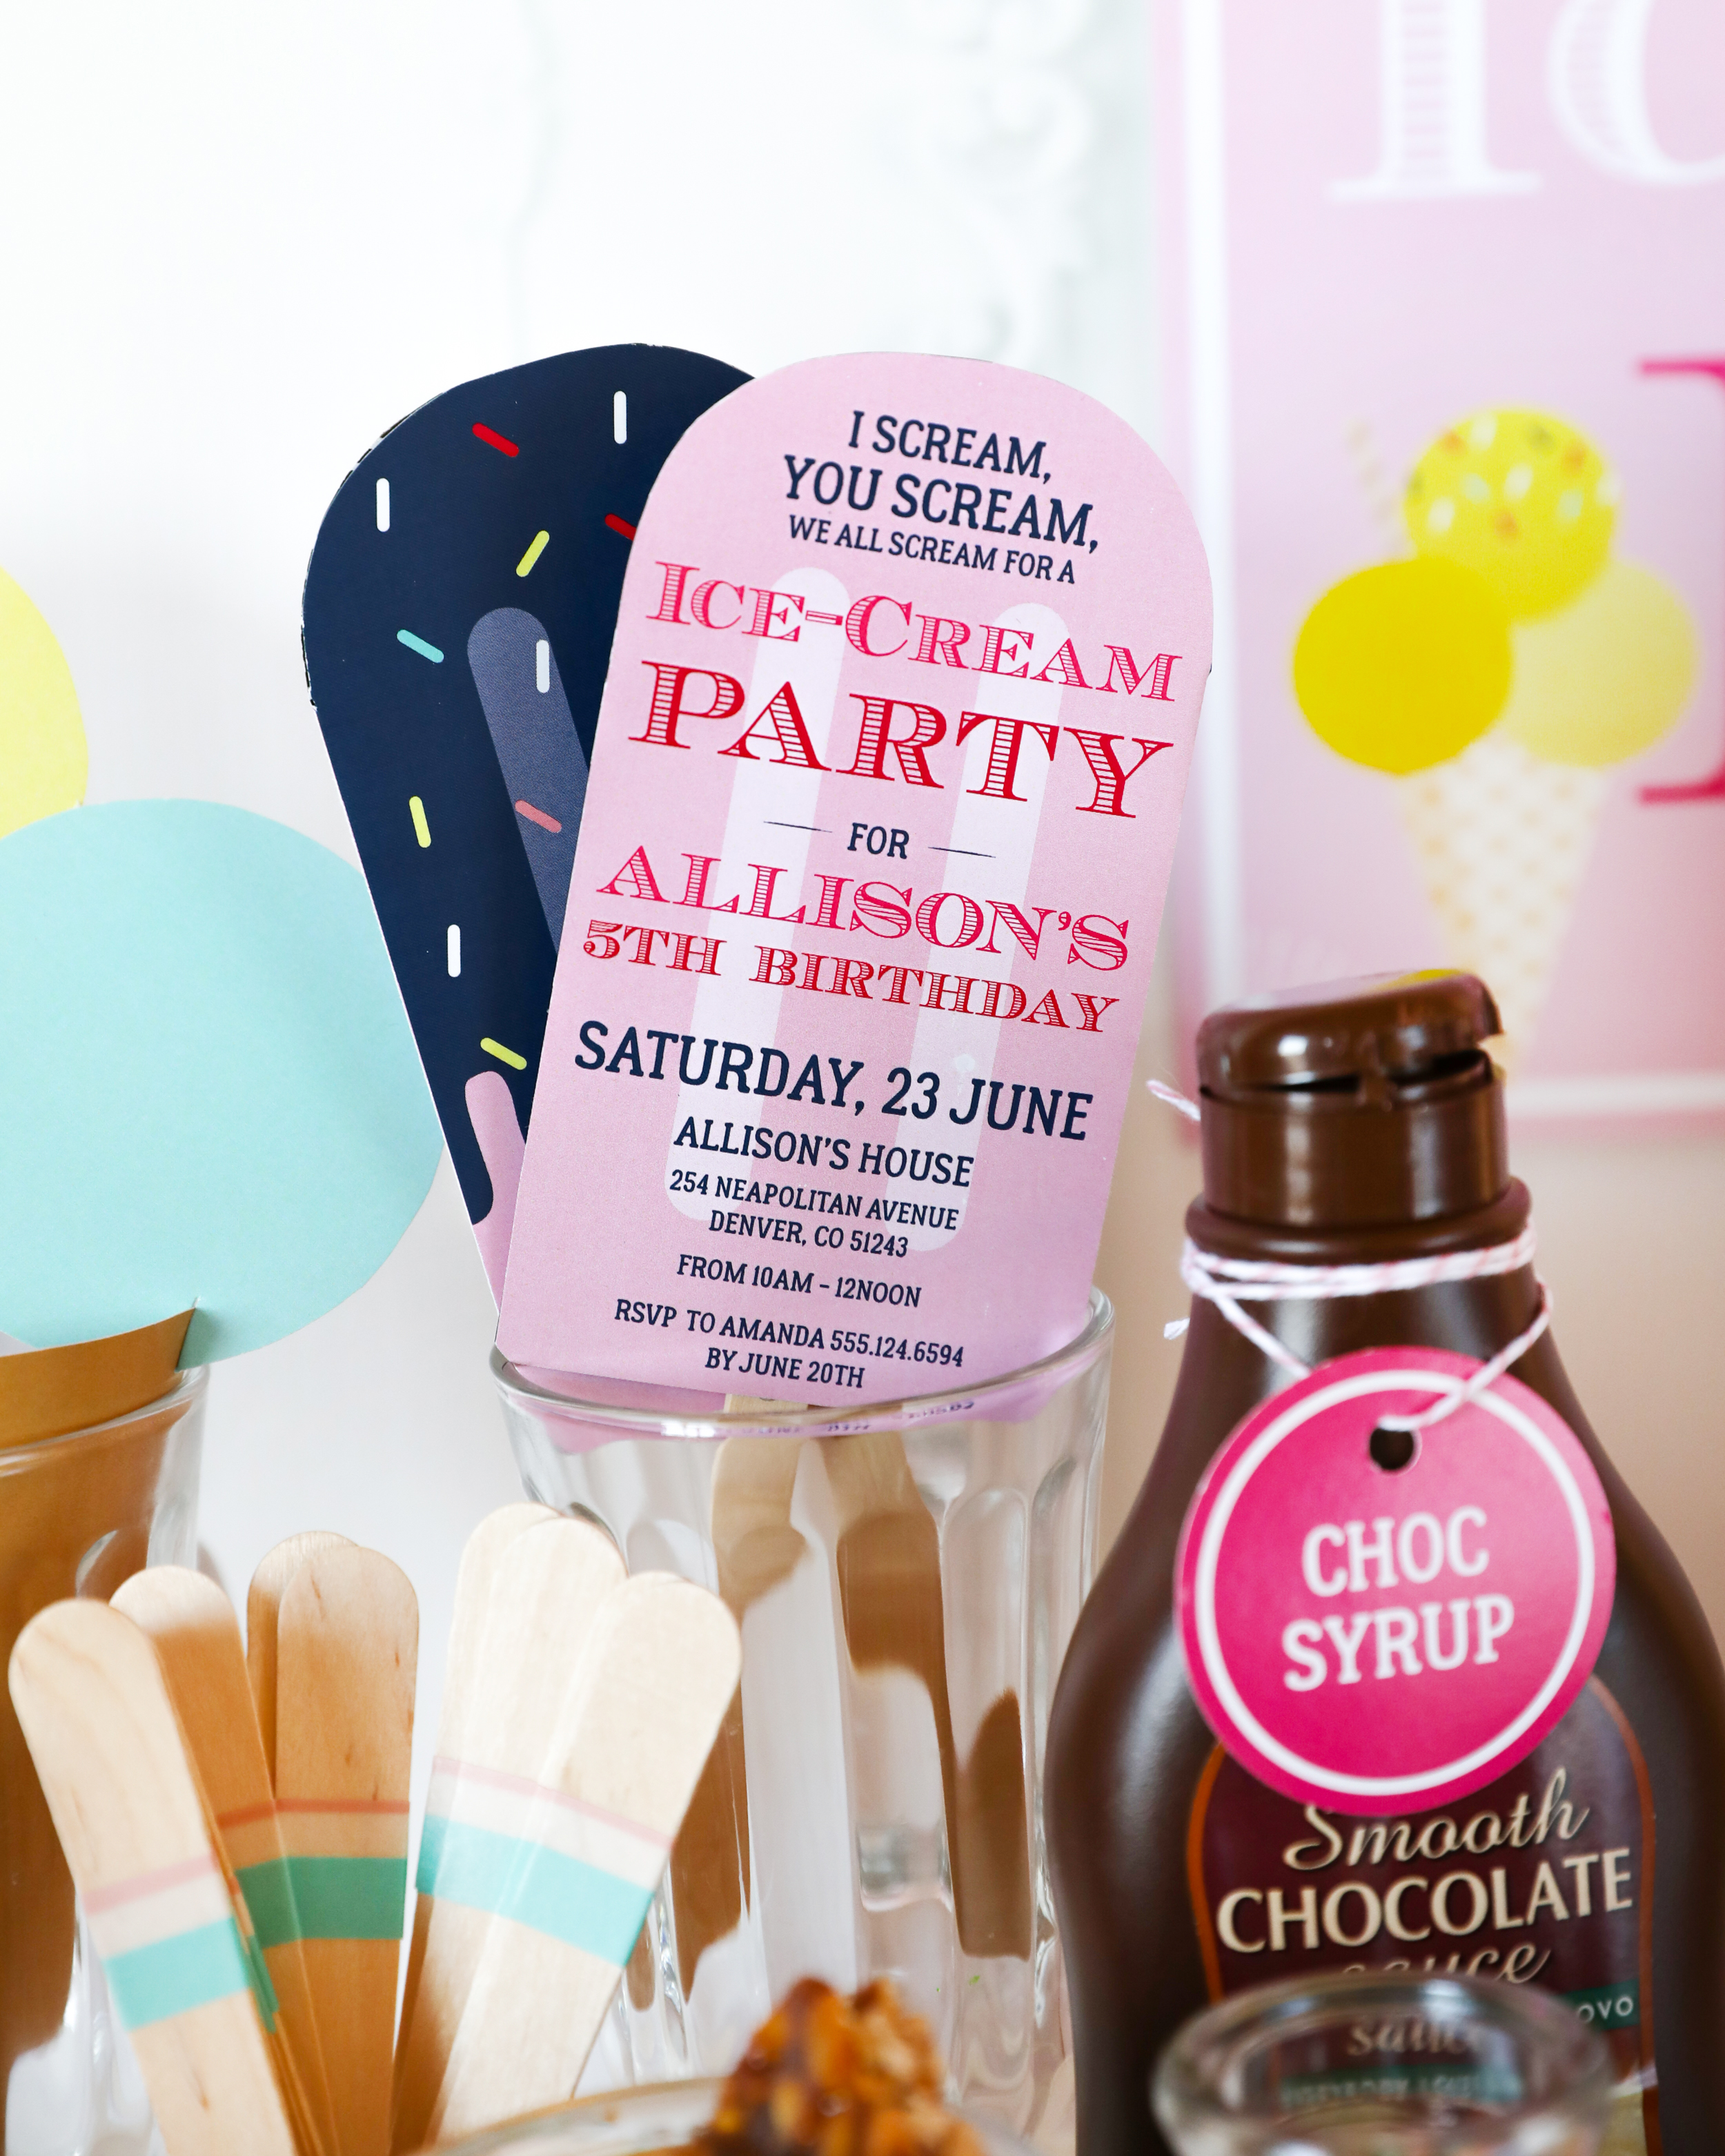 Free Ice-Cream Party invitation